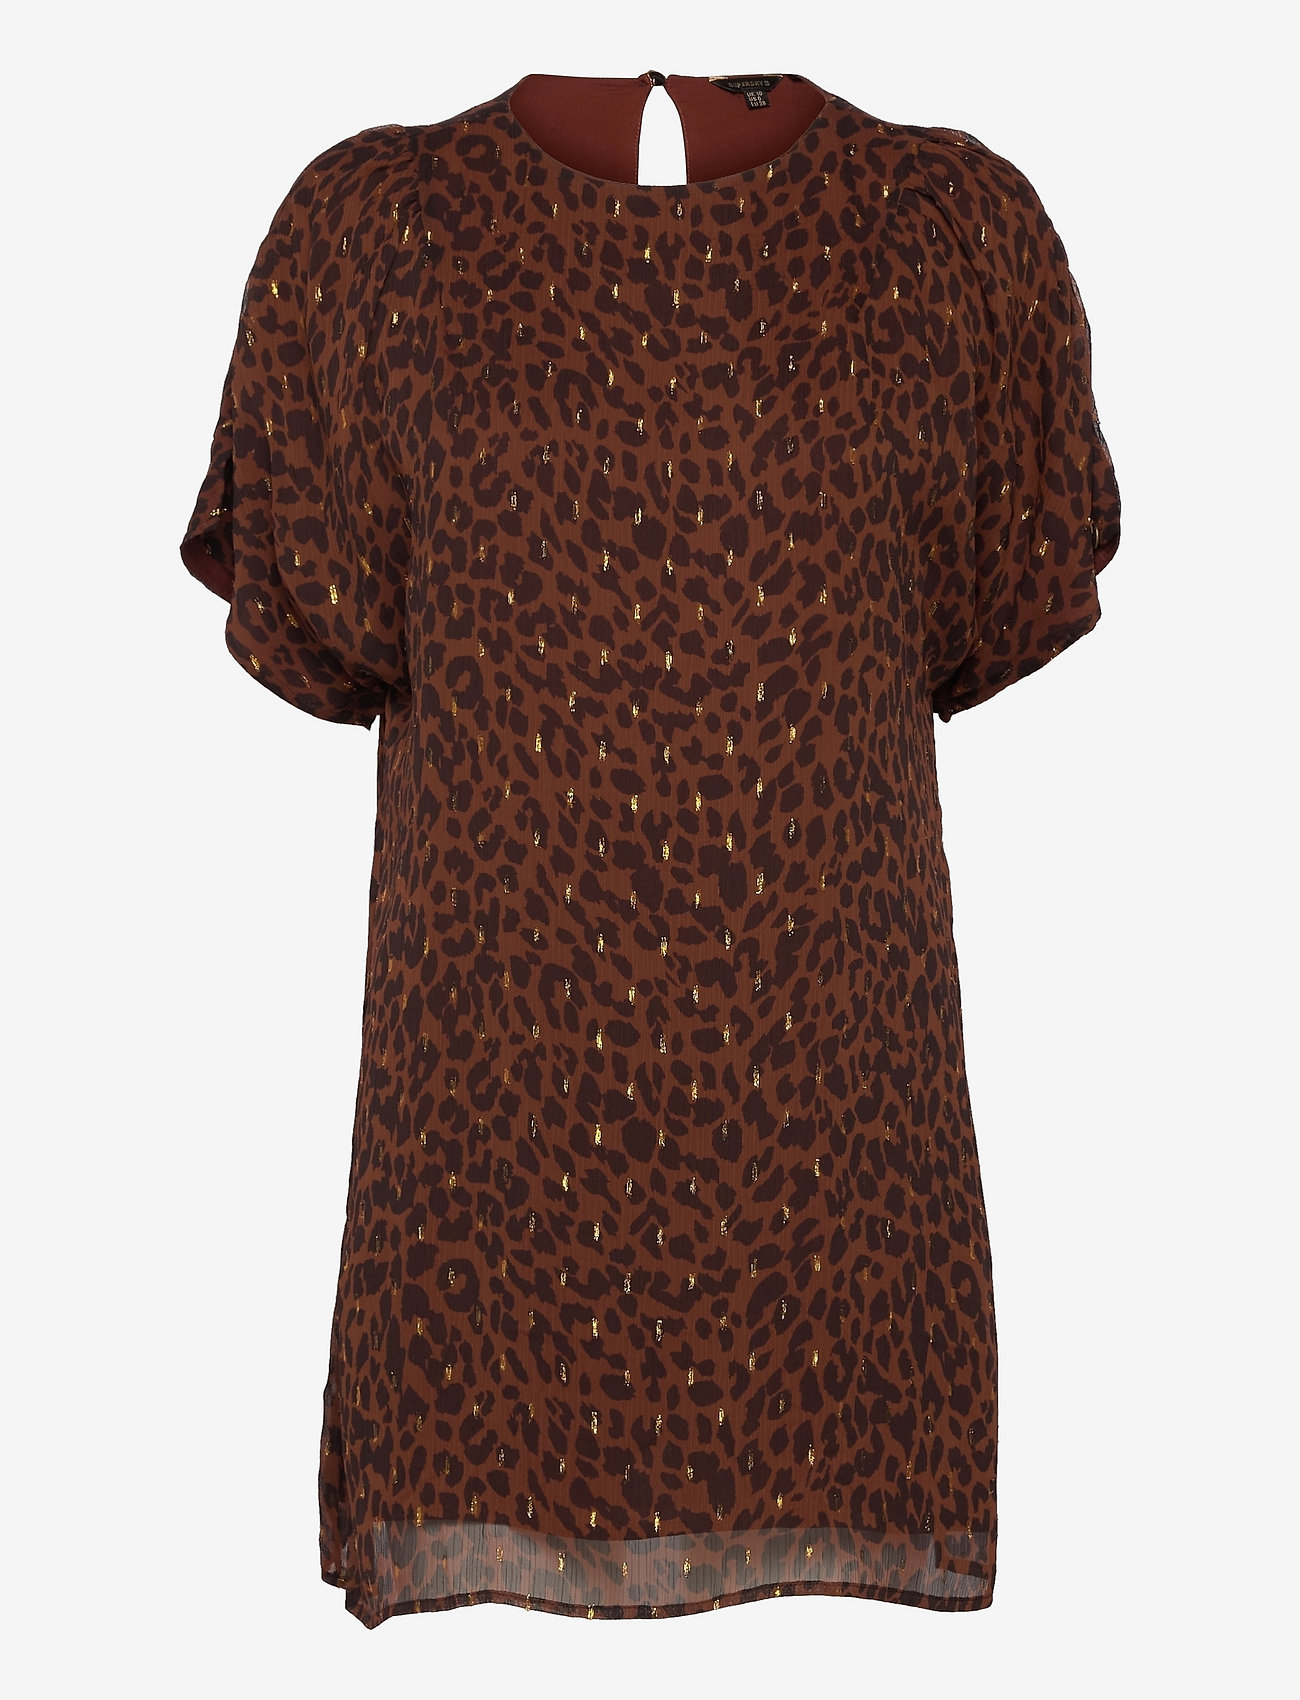 Superdry - T-Shirt Metallic Dress - korta klänningar - leopard print - 0